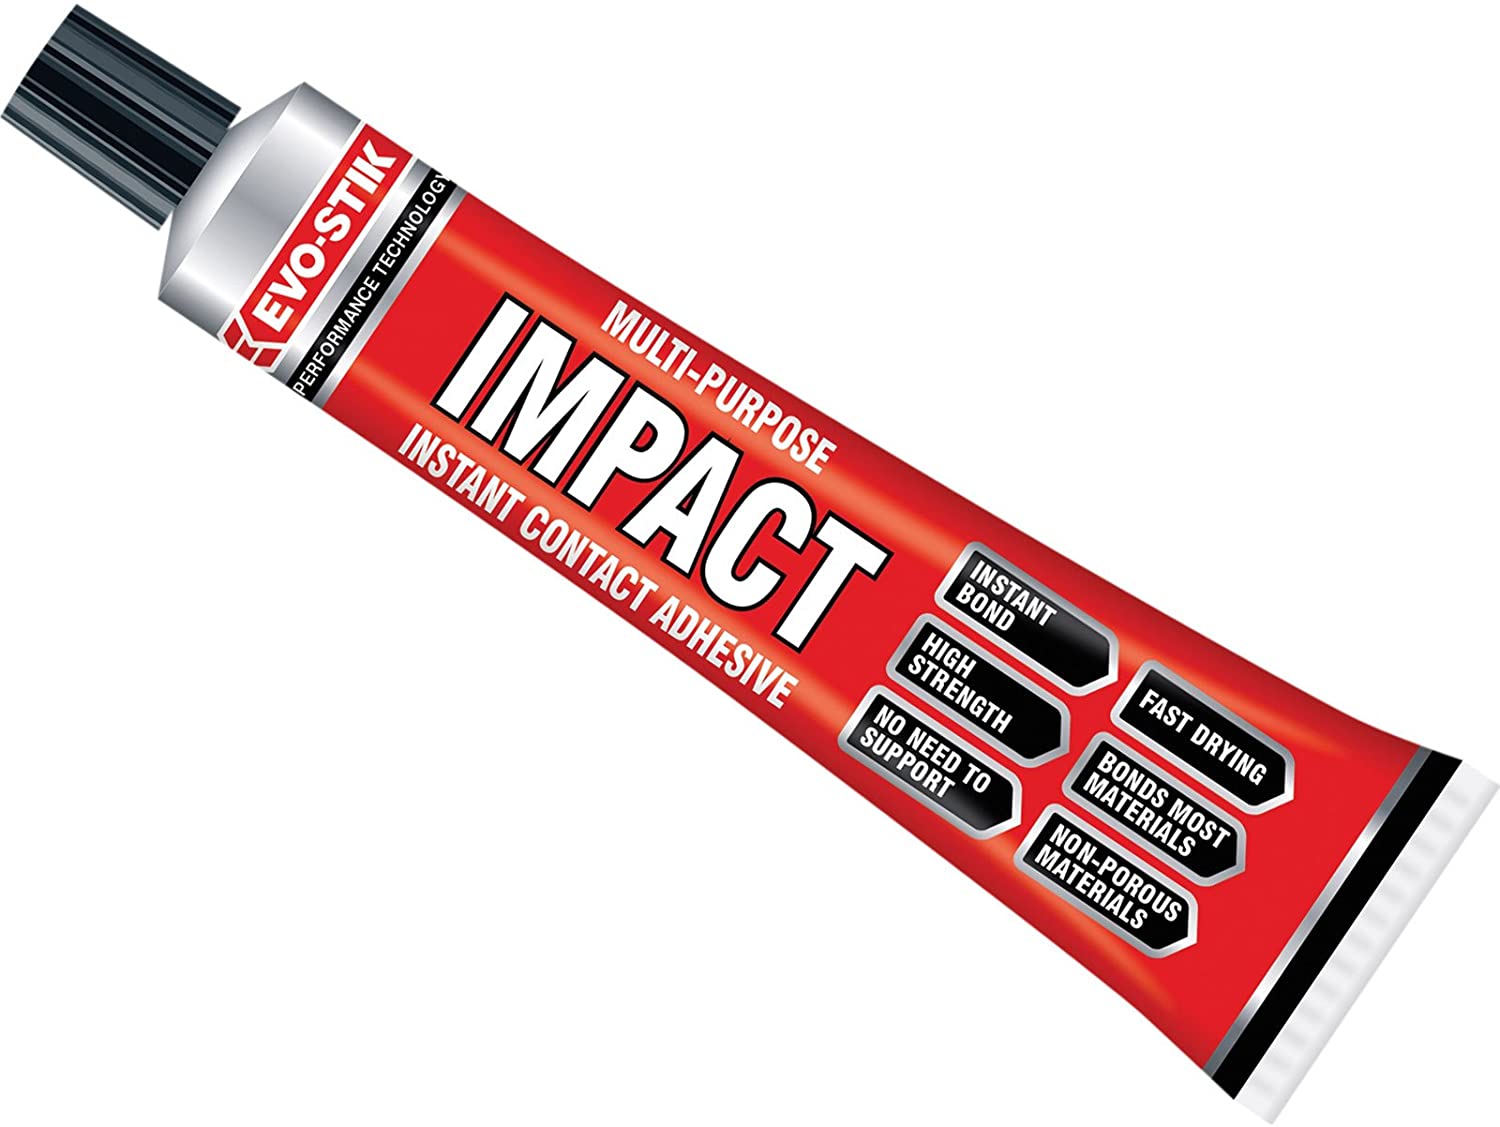 Evo-stik Impact Adhesive 65g Multi Purpose Instant Contact Glue evostik